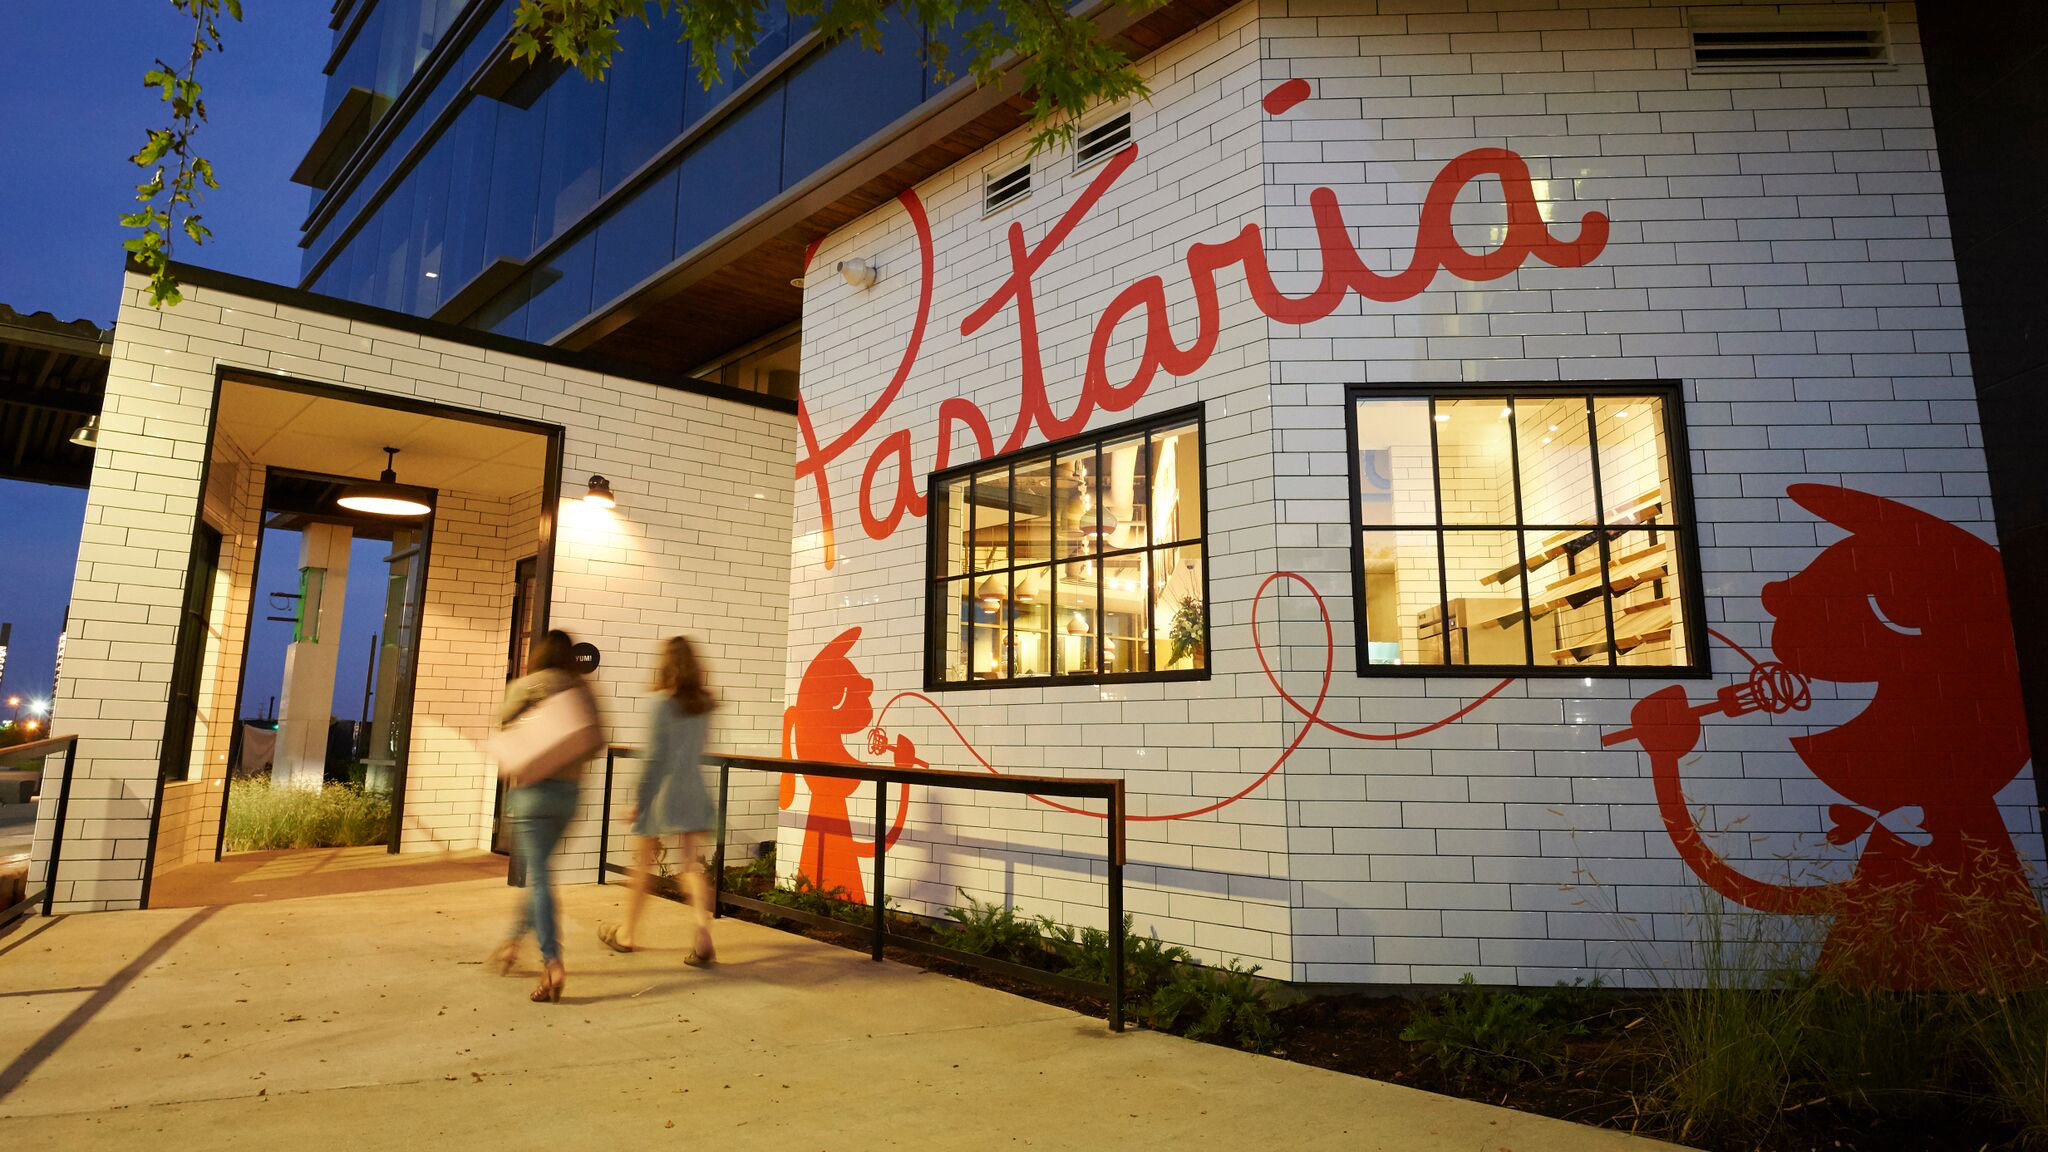 Pastaria Nashville's exterior branding